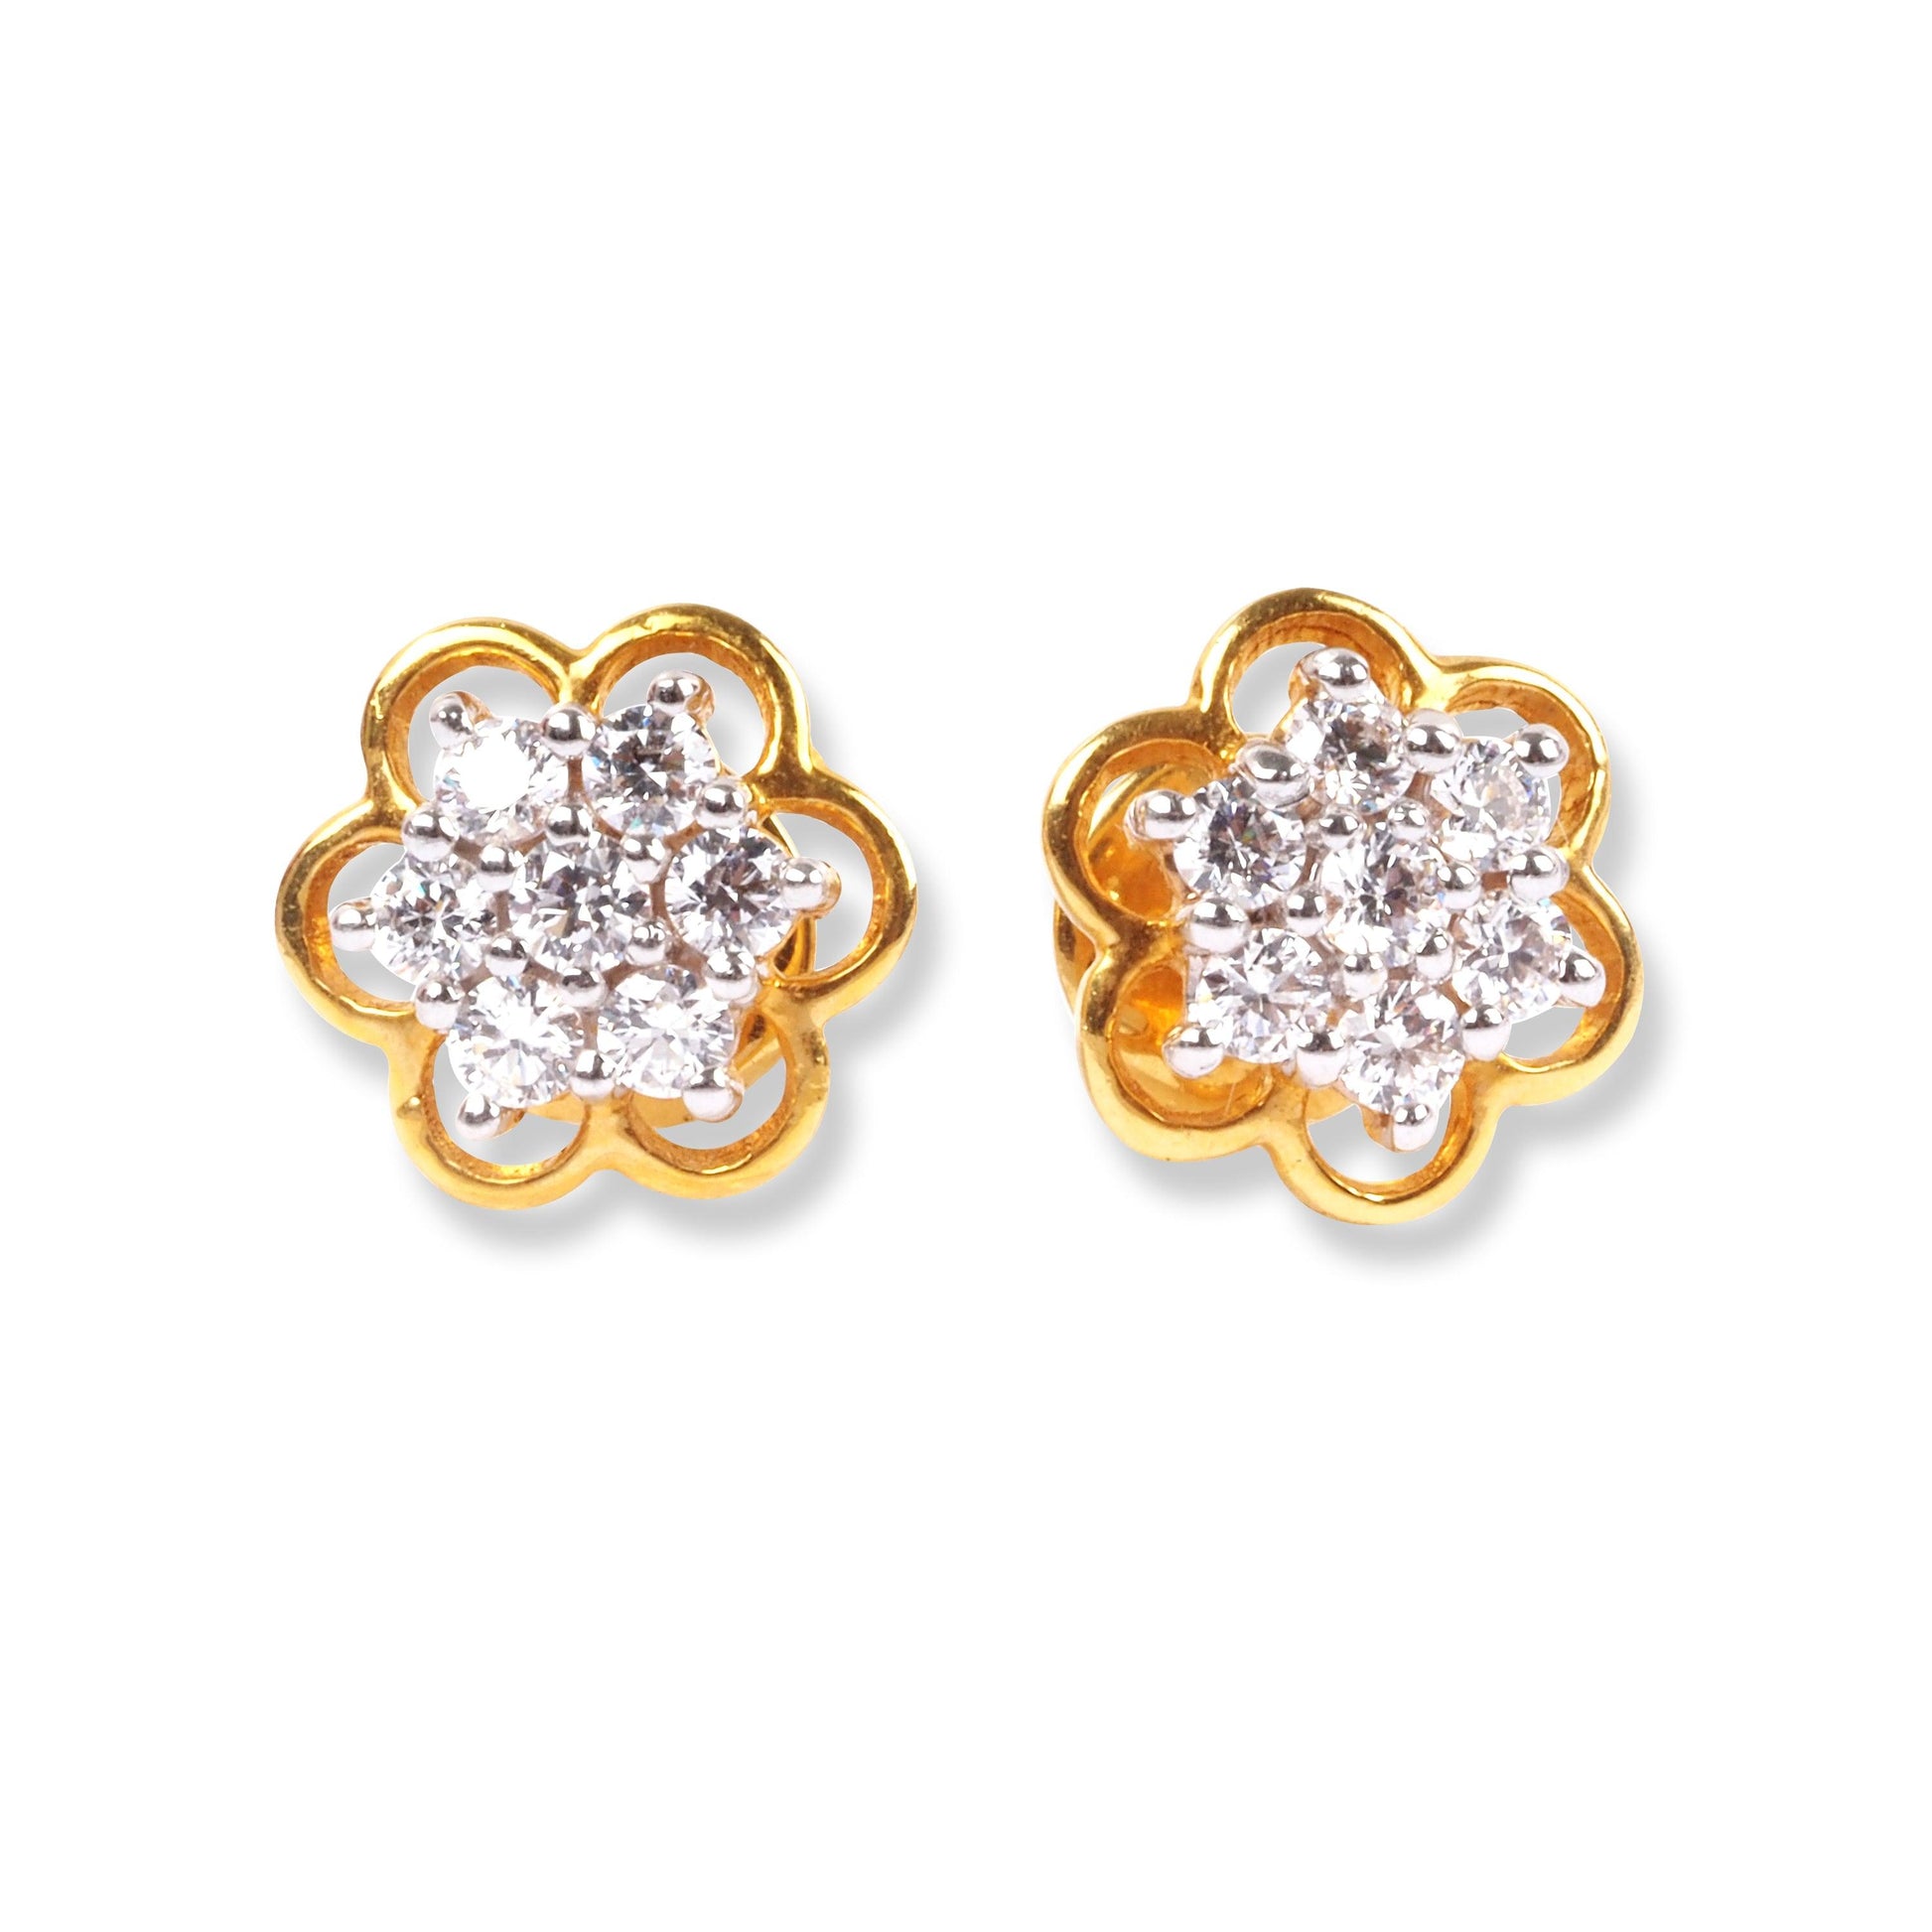 22ct Gold Flower Design Set with Cubic Zirconia Stones (Pendant + Stud Earrings) - Minar Jewellers